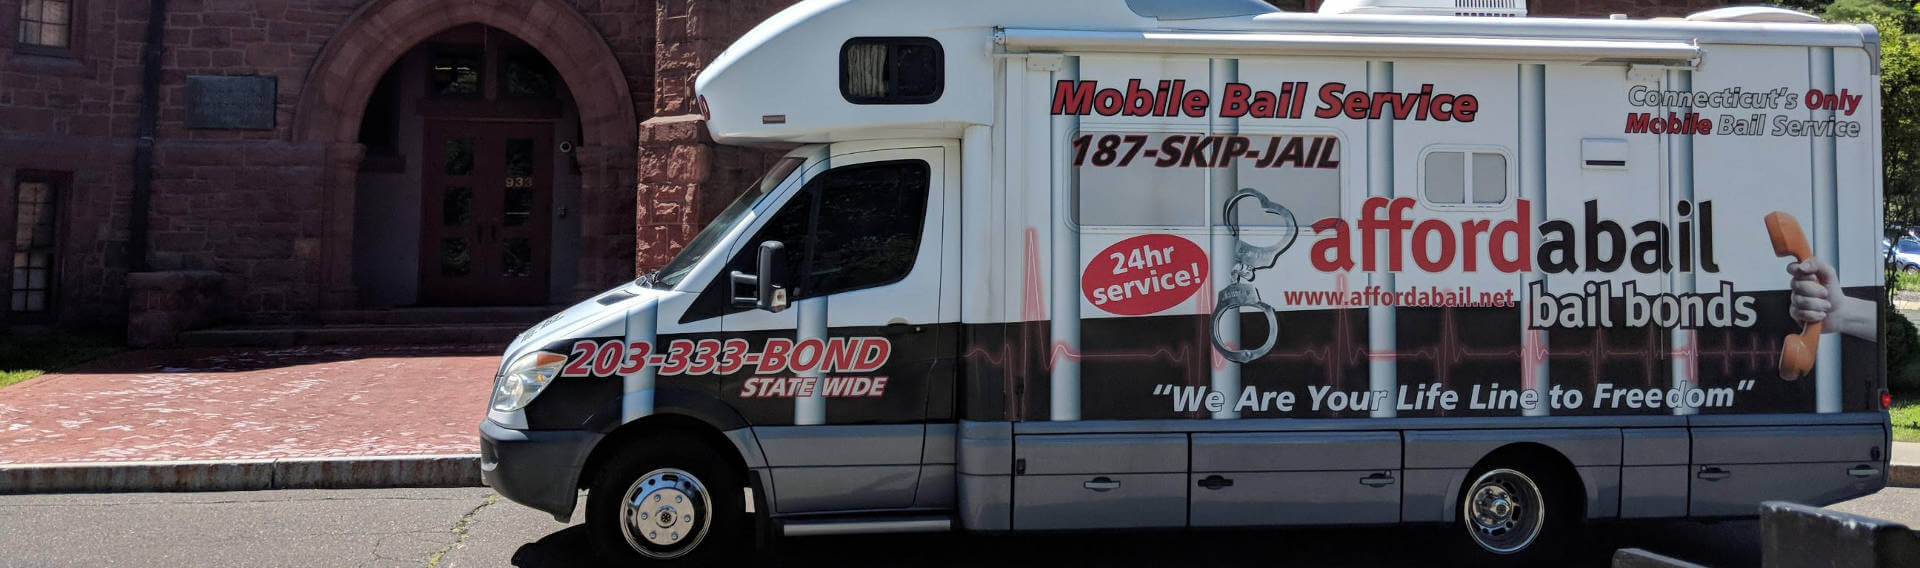 Mobile bail bonds service in Cheshire CT